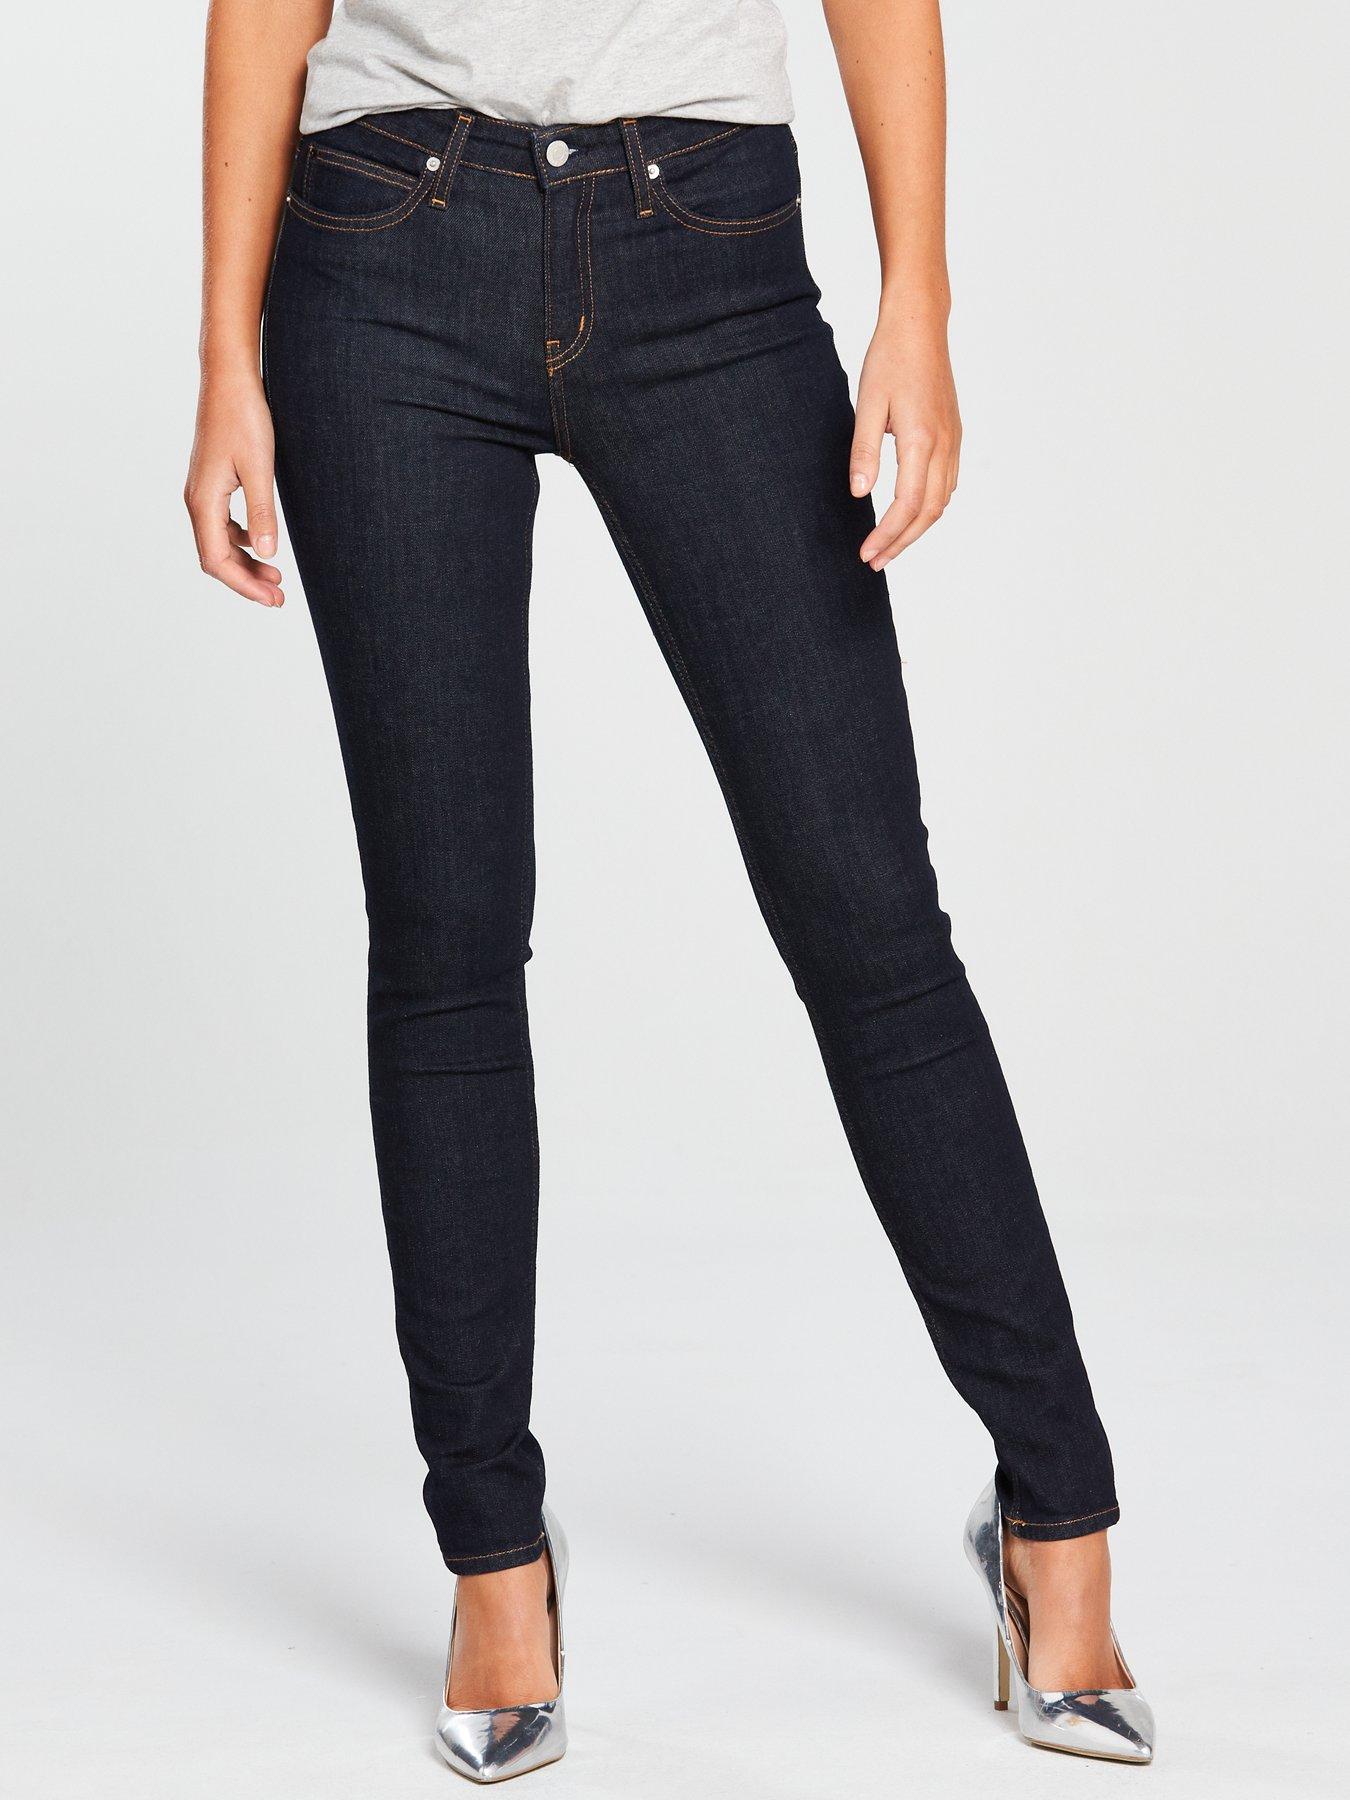 calvin klein jeans size